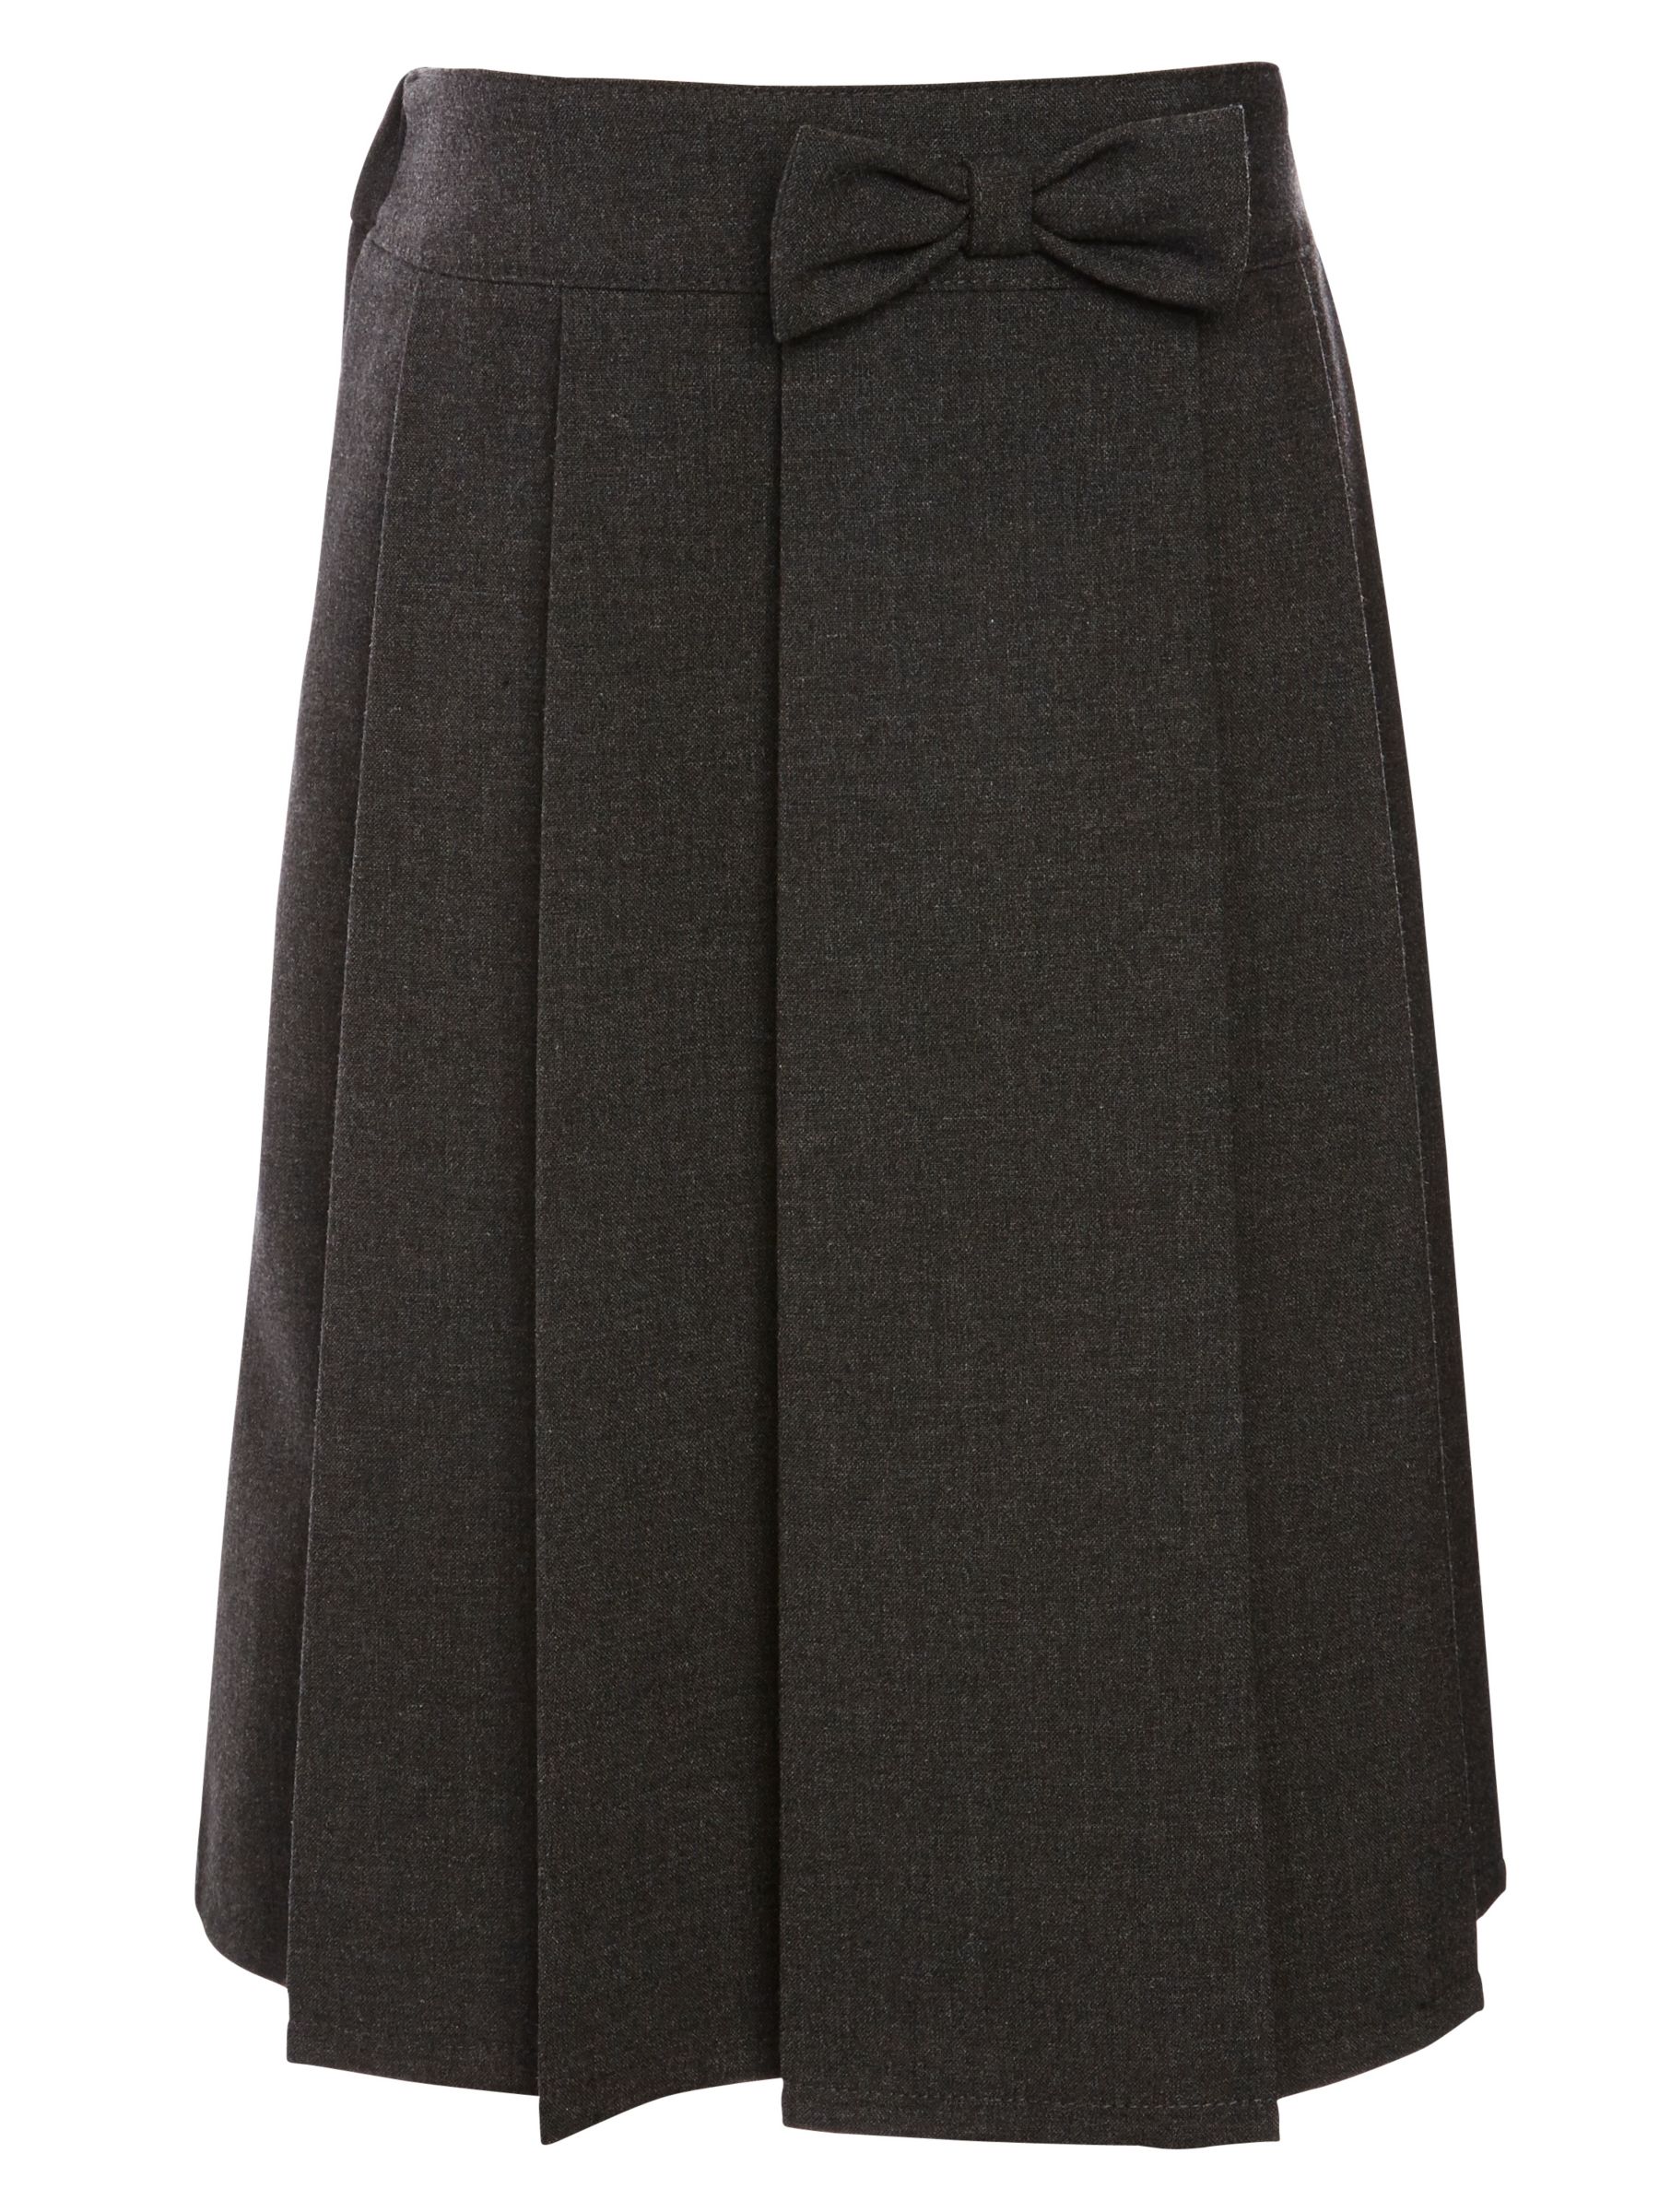 John Lewis & Partners Girls' Adjustable Waist Pleated School Skirt With Bow, Grey